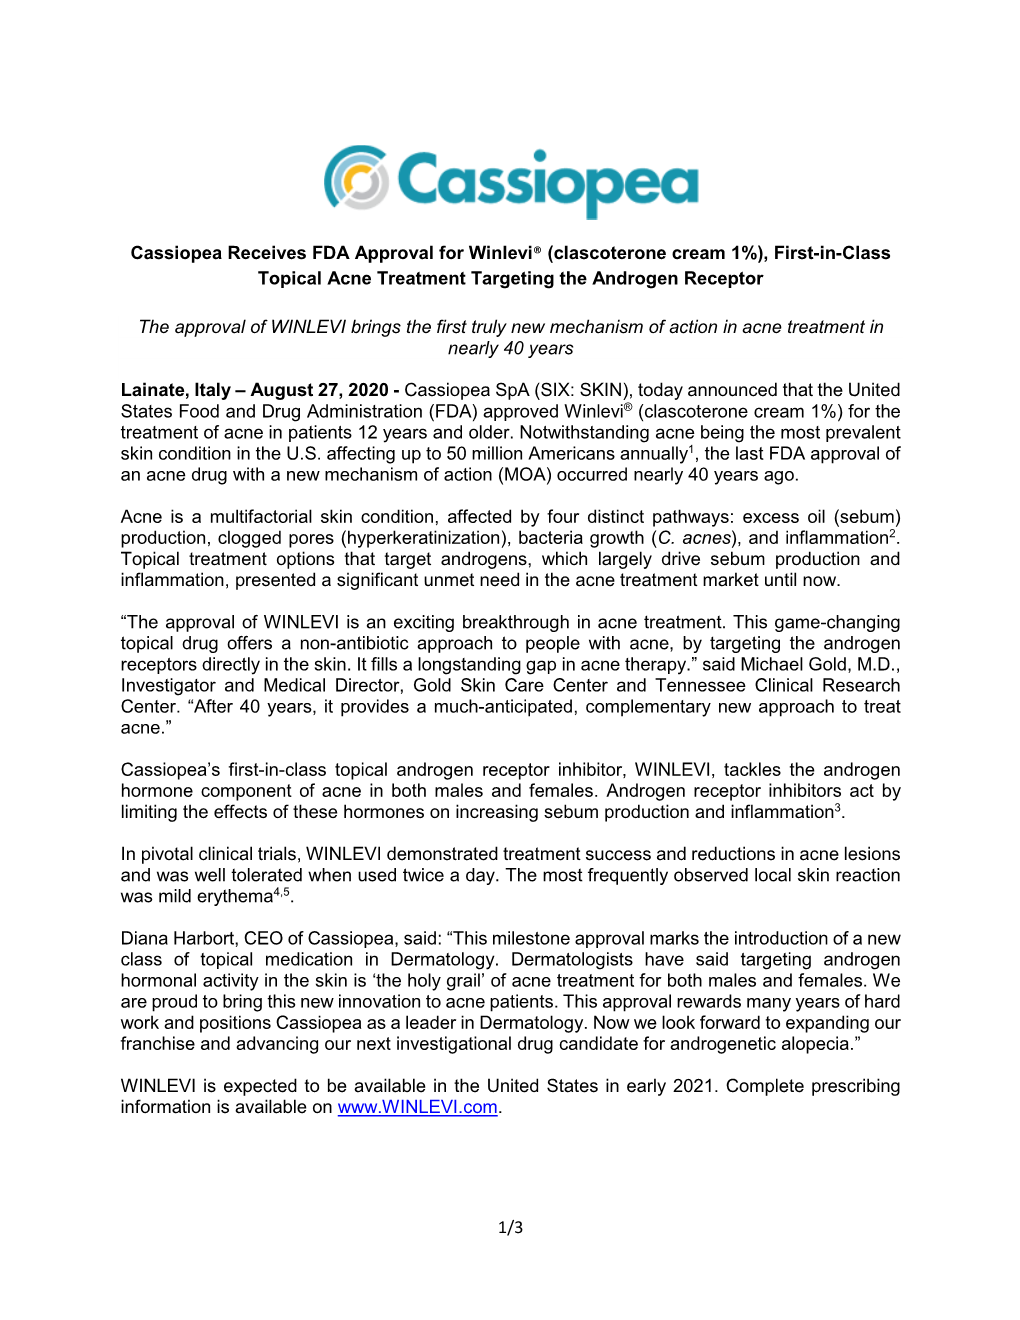 1/3 Cassiopea Receives FDA Approval for Winlevi® (Clascoterone